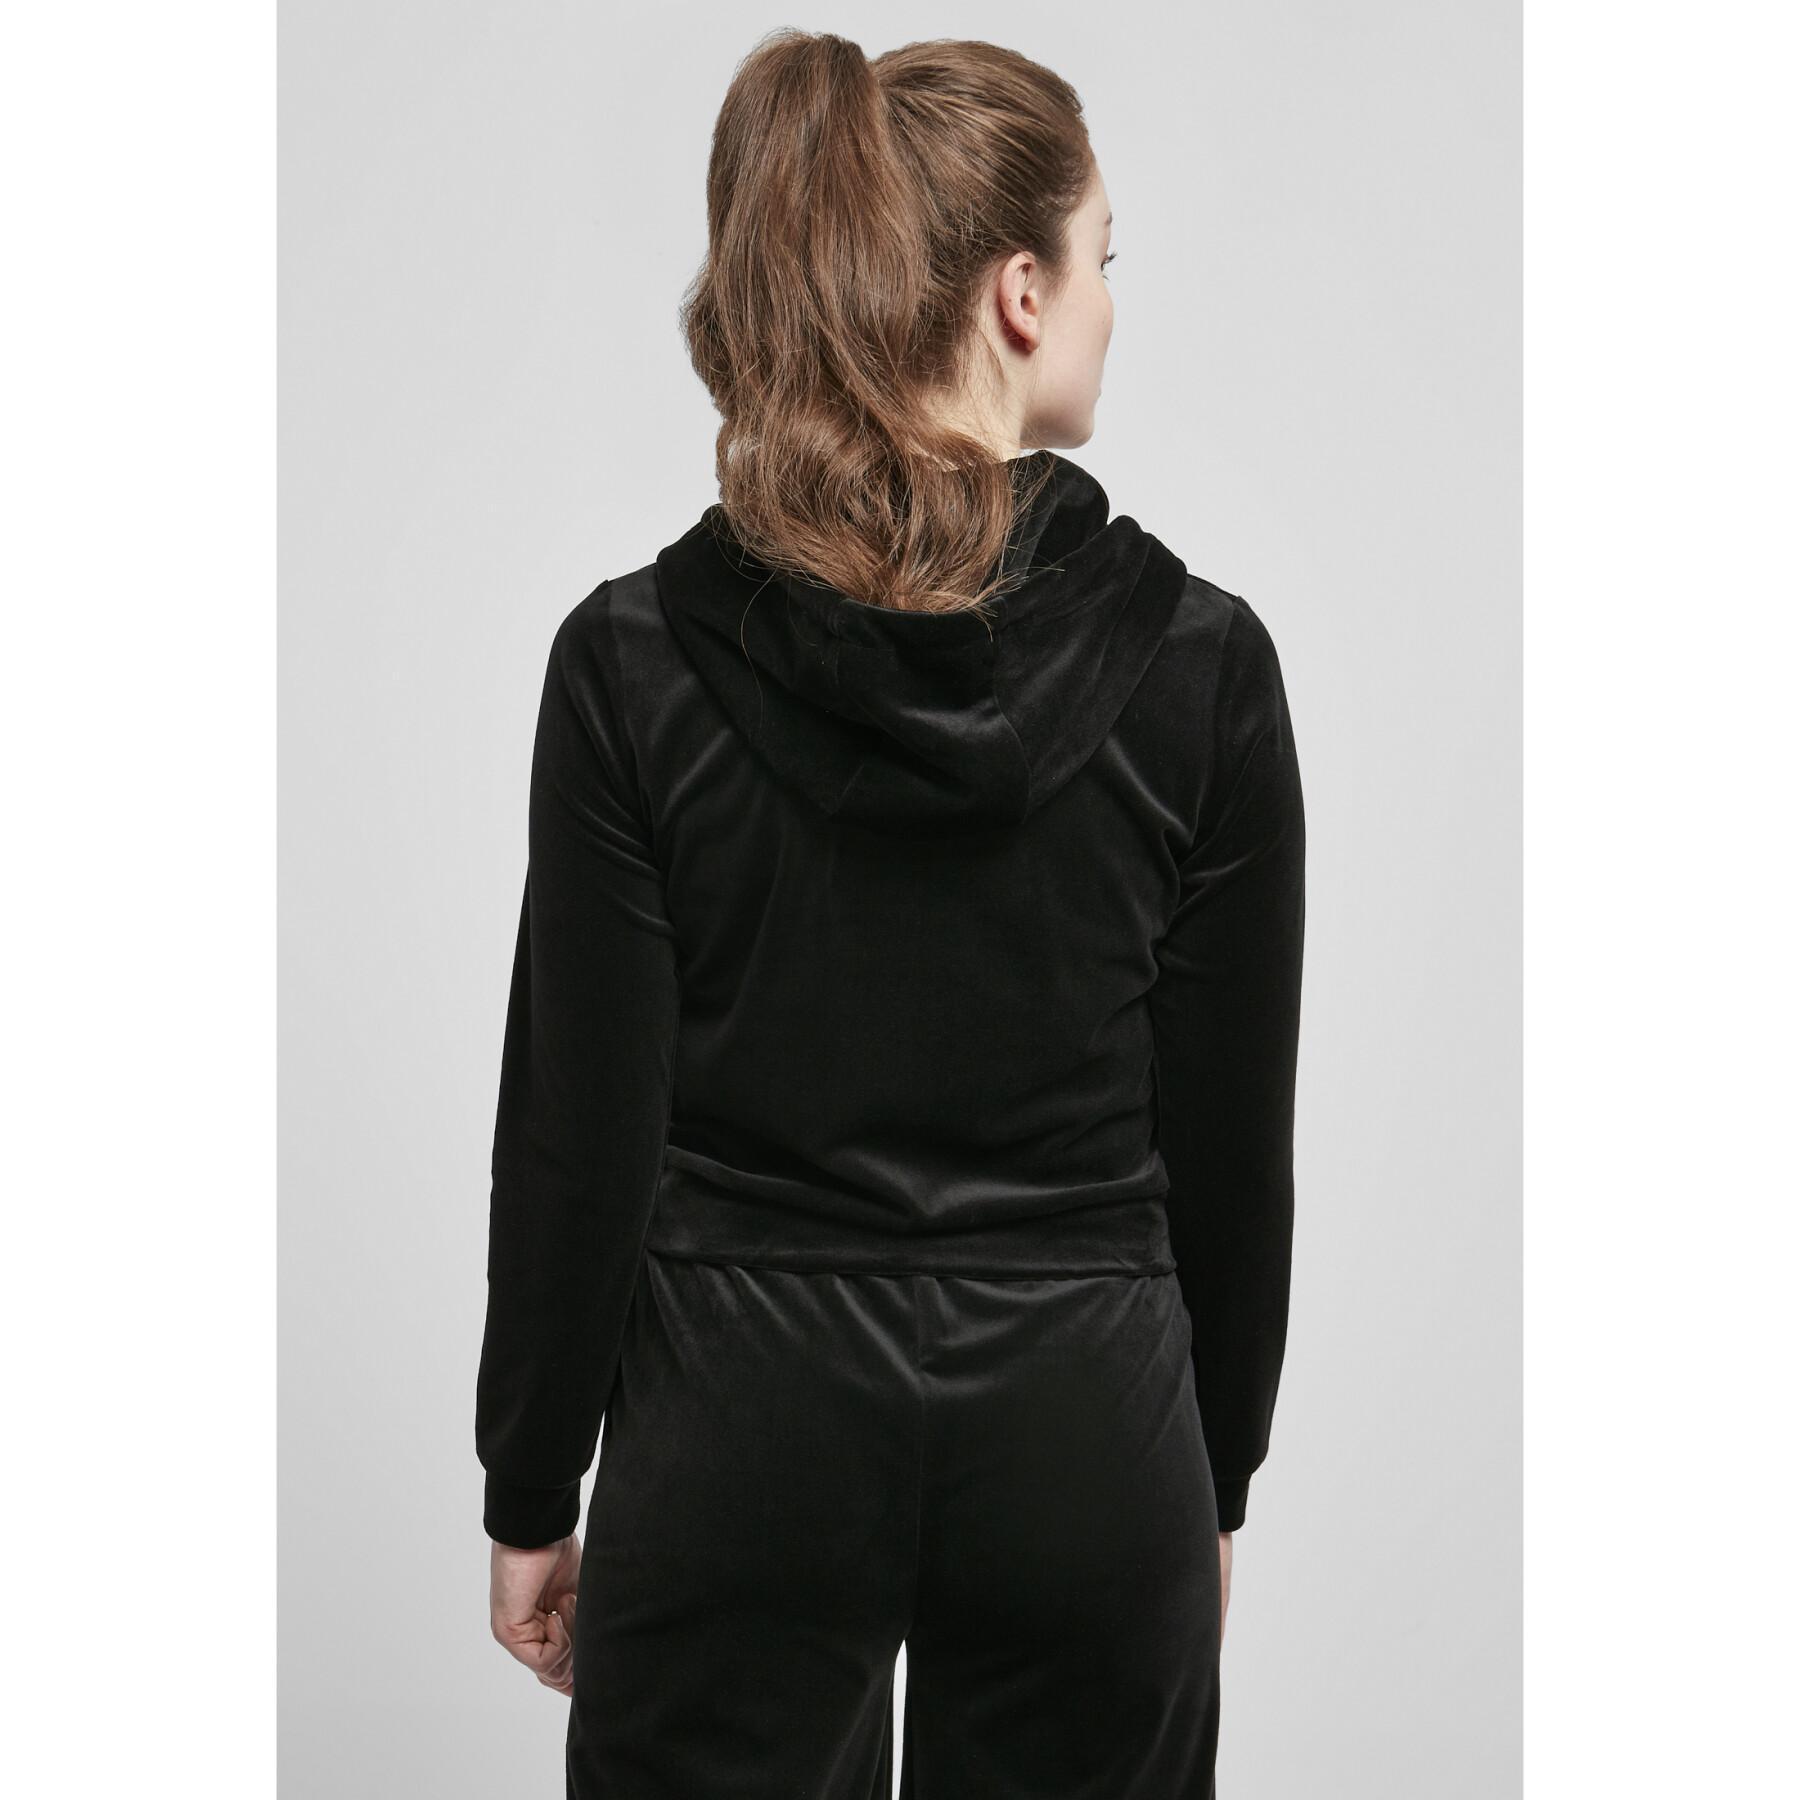 Women's hoodie large sizes Urban Classics velvet zip